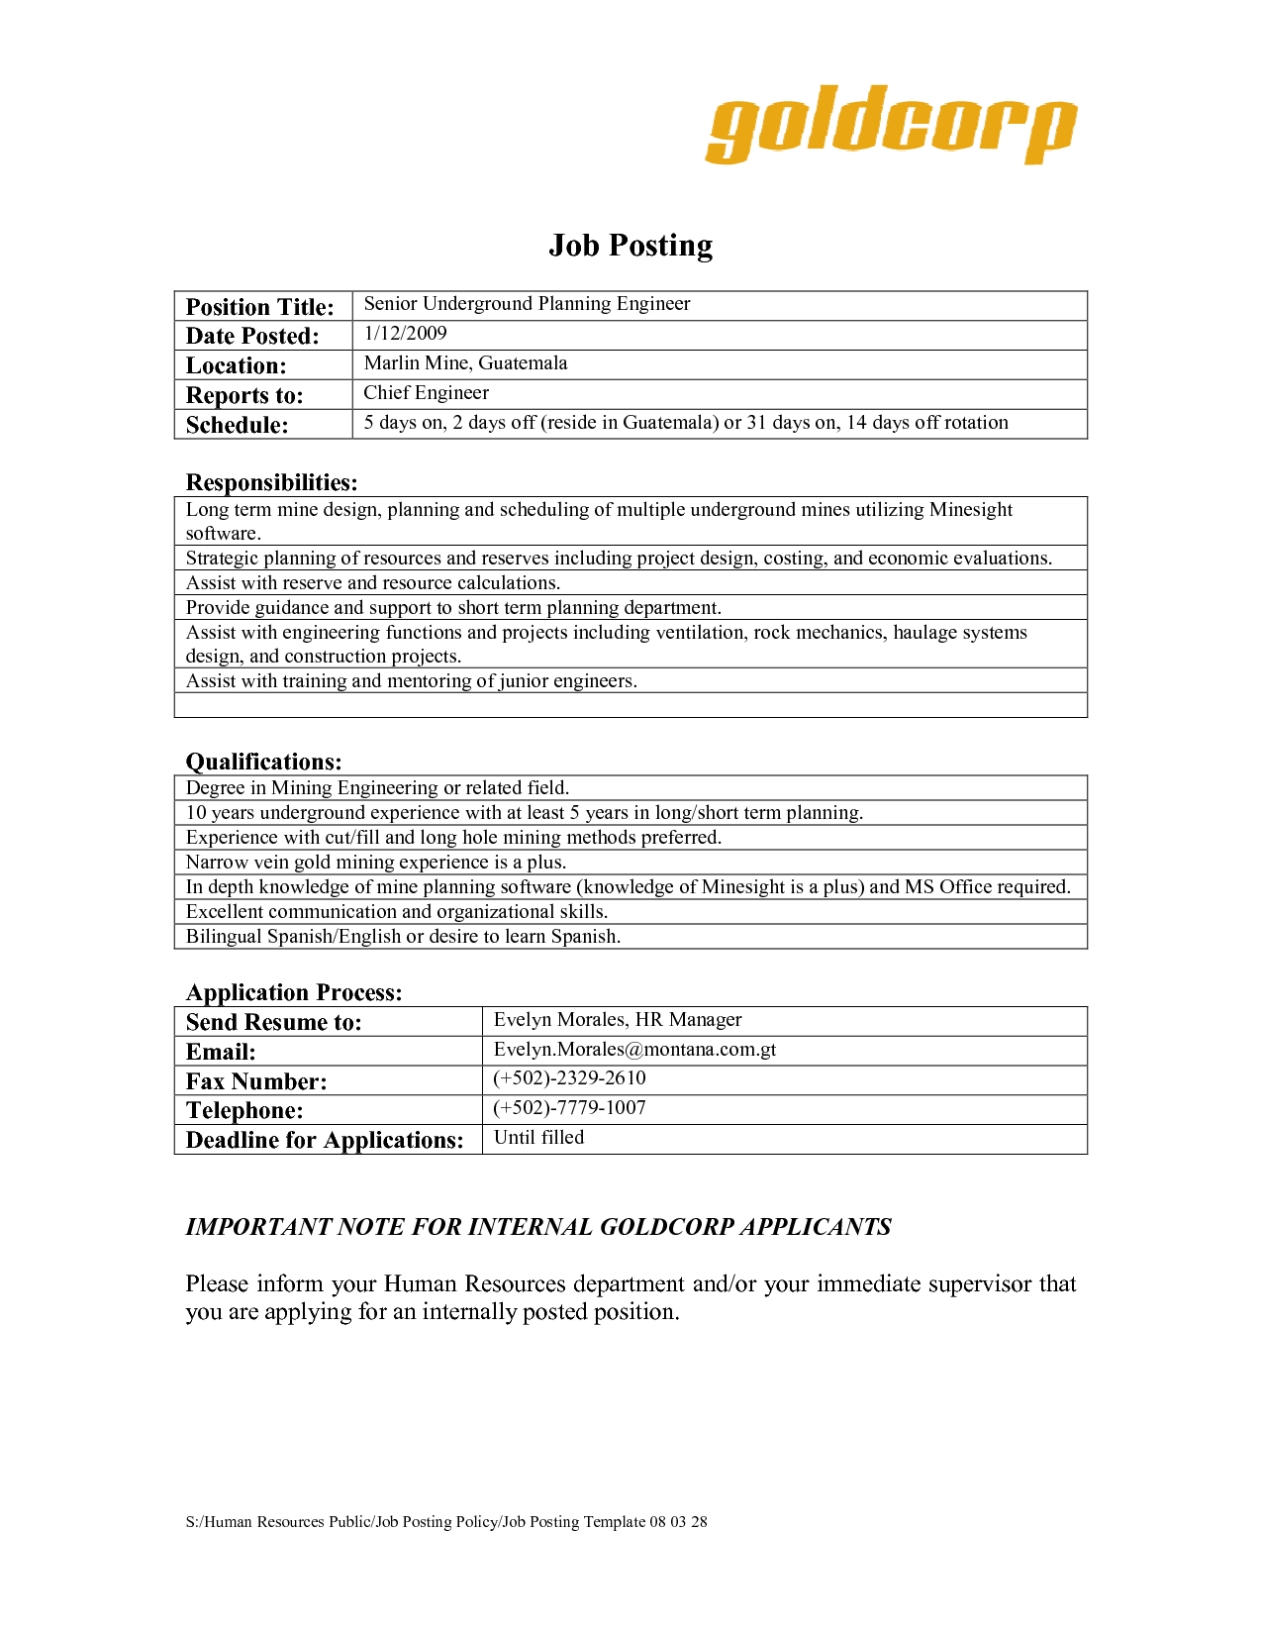 Sample Job Posting - Free Printable Documents Regarding Internal Job Posting Template Word